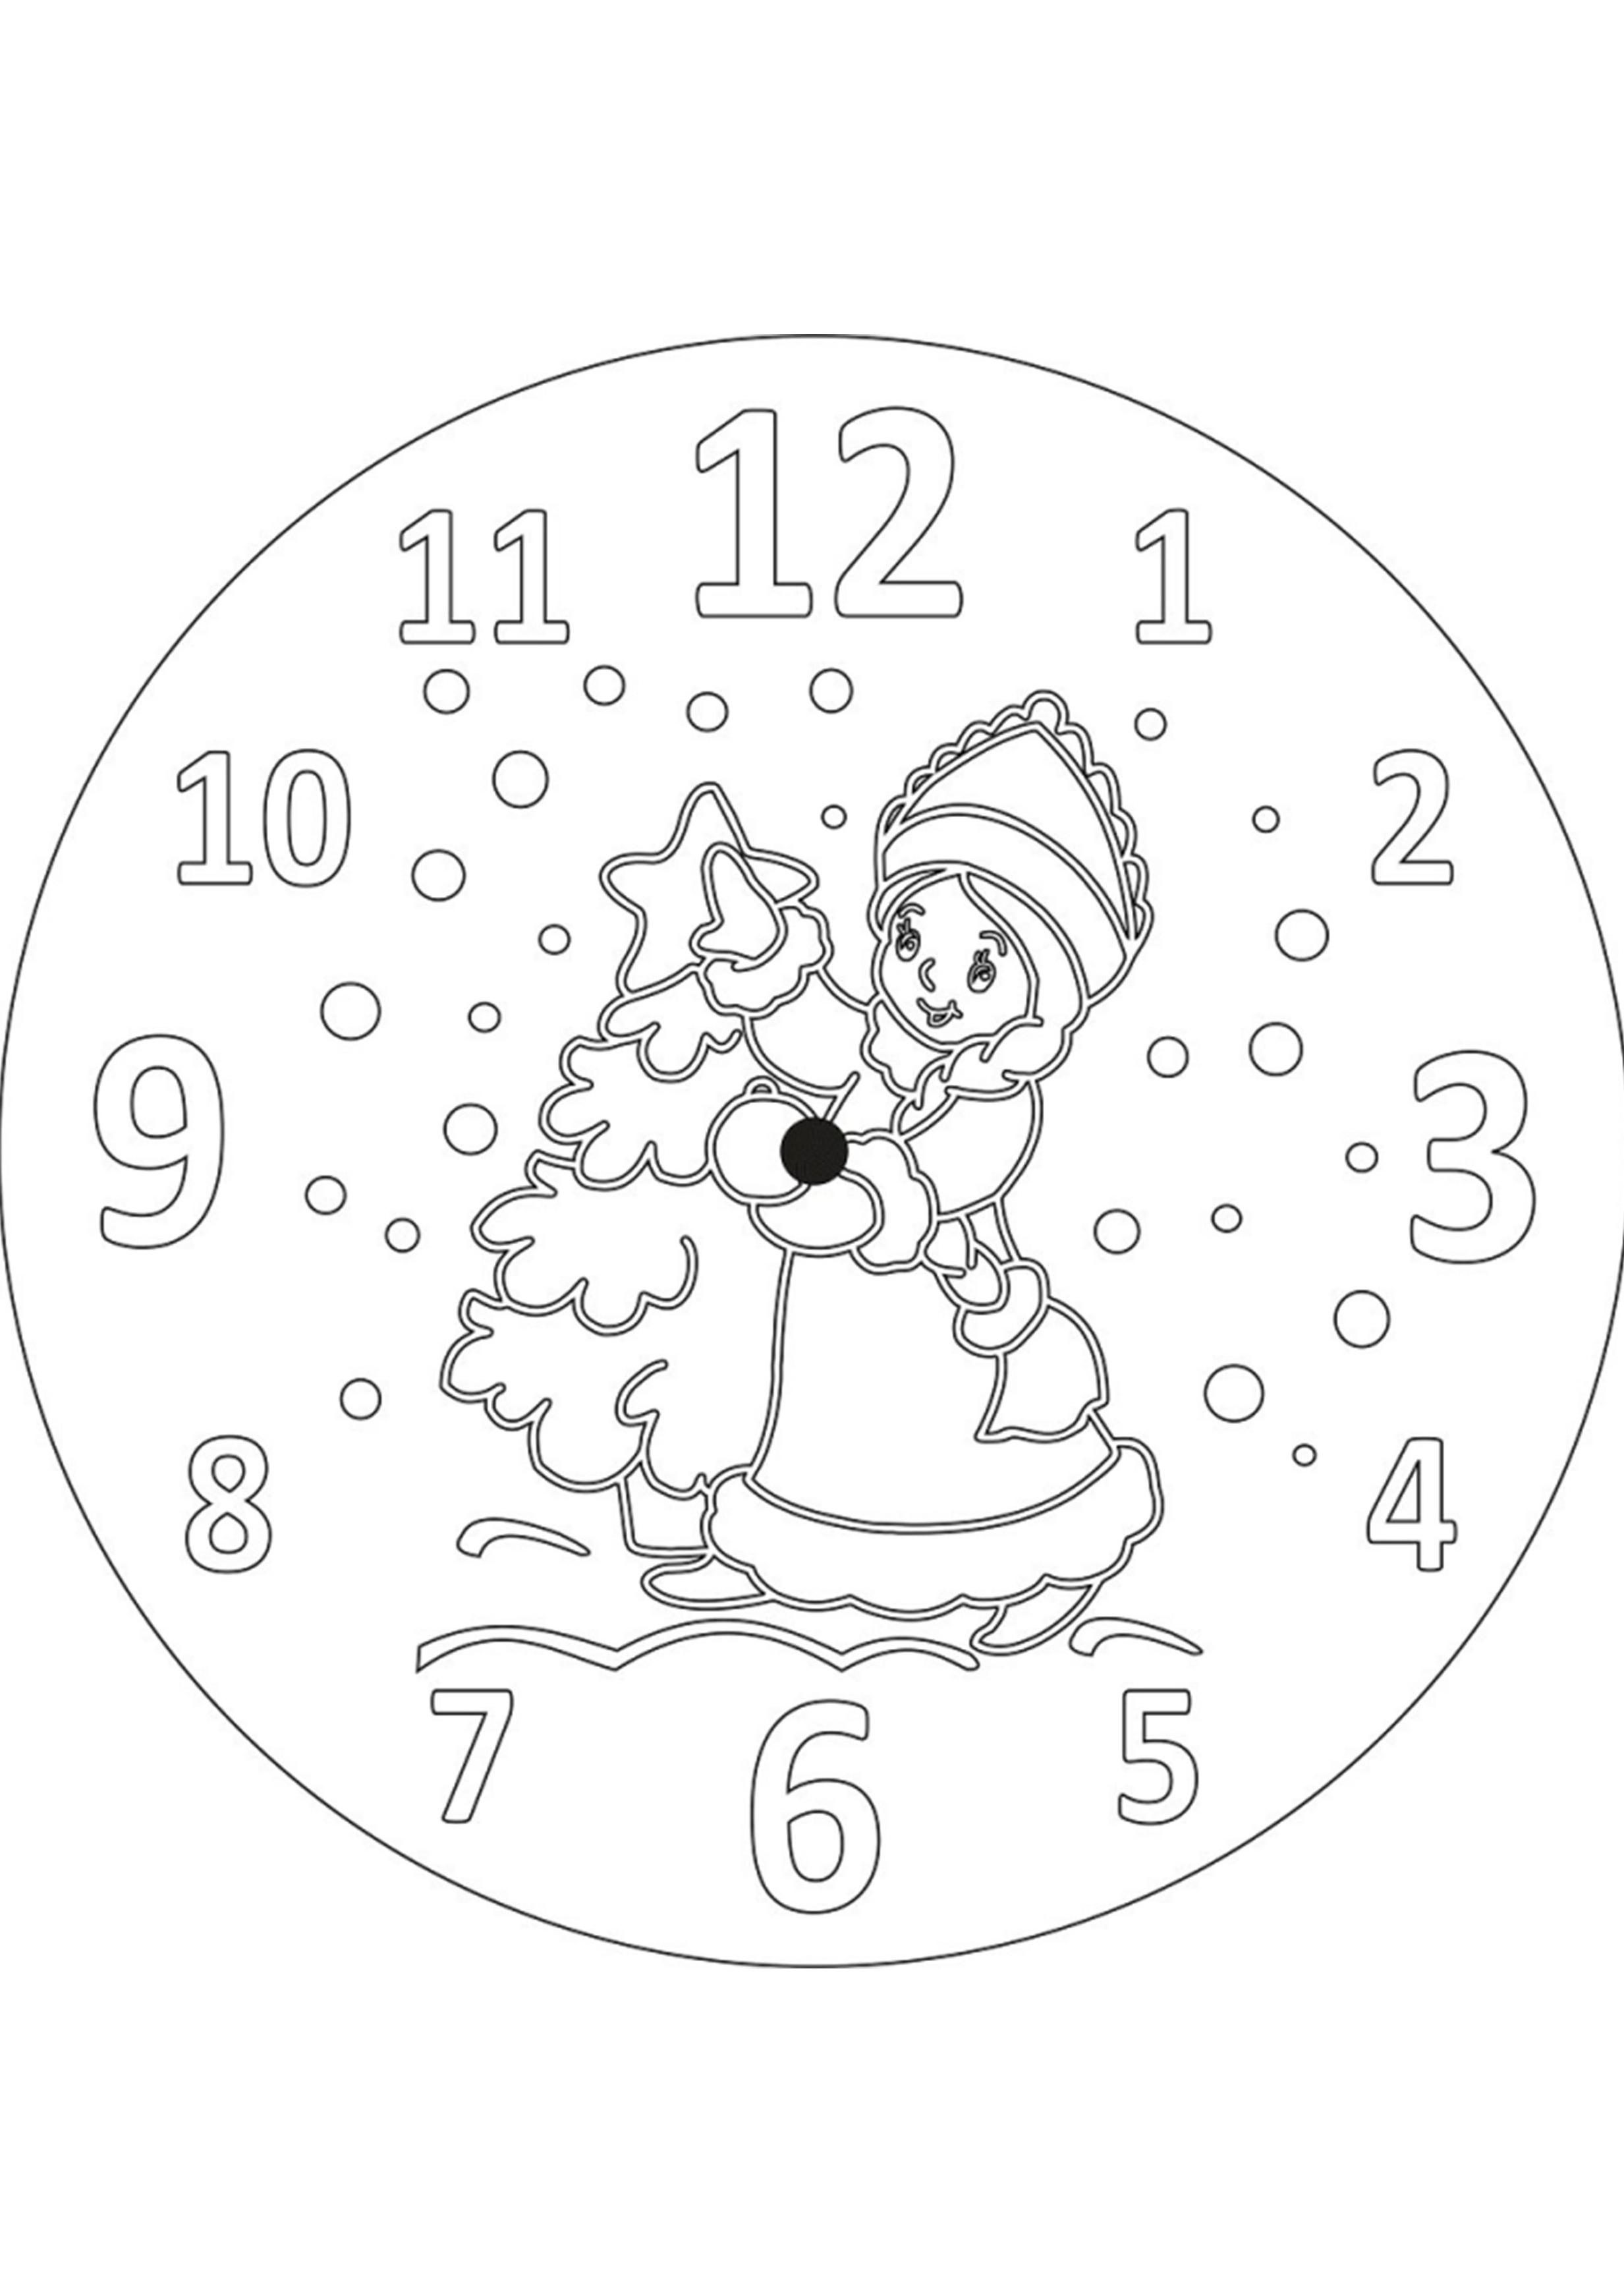 Картинка новогодний циферблат часов для распечатки